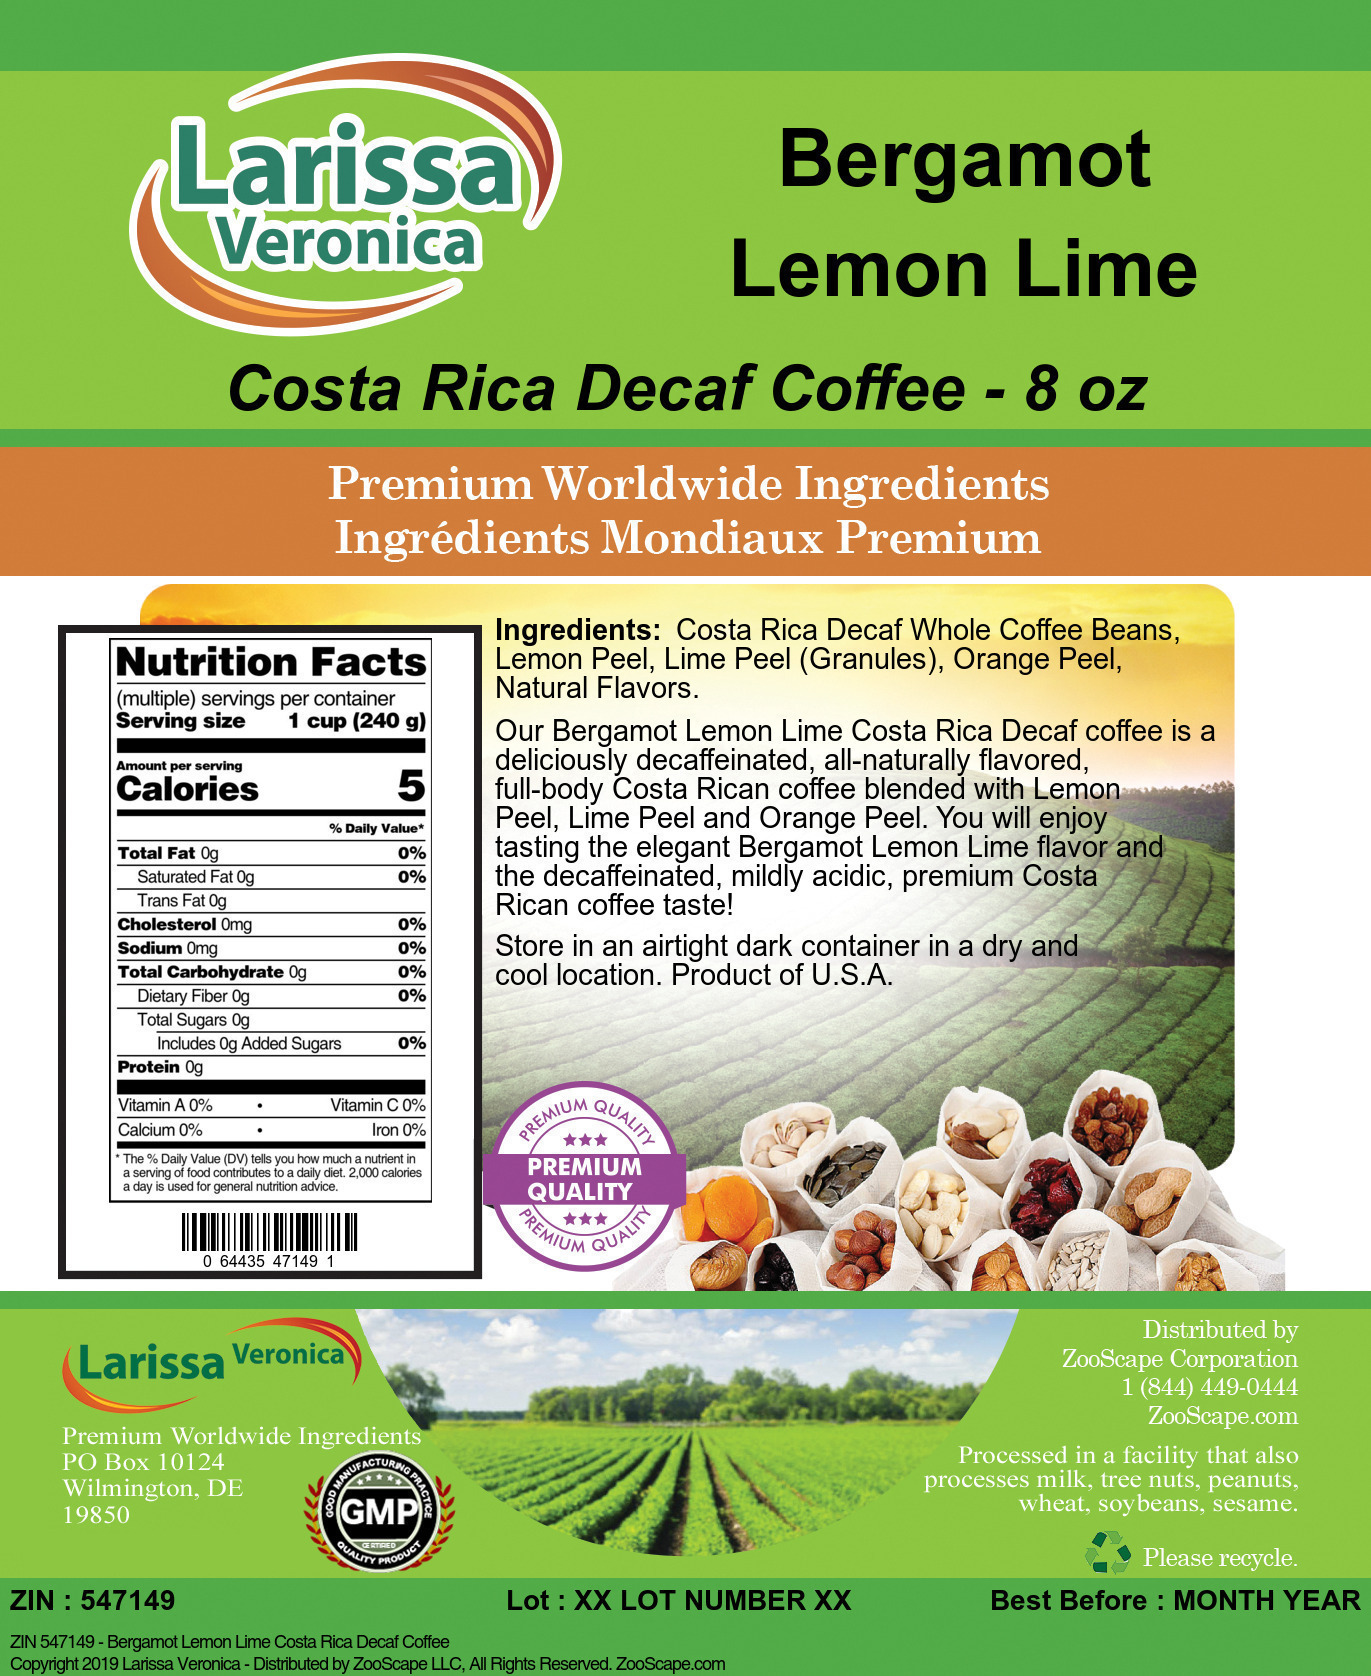 Bergamot Lemon Lime Costa Rica Decaf Coffee - Label